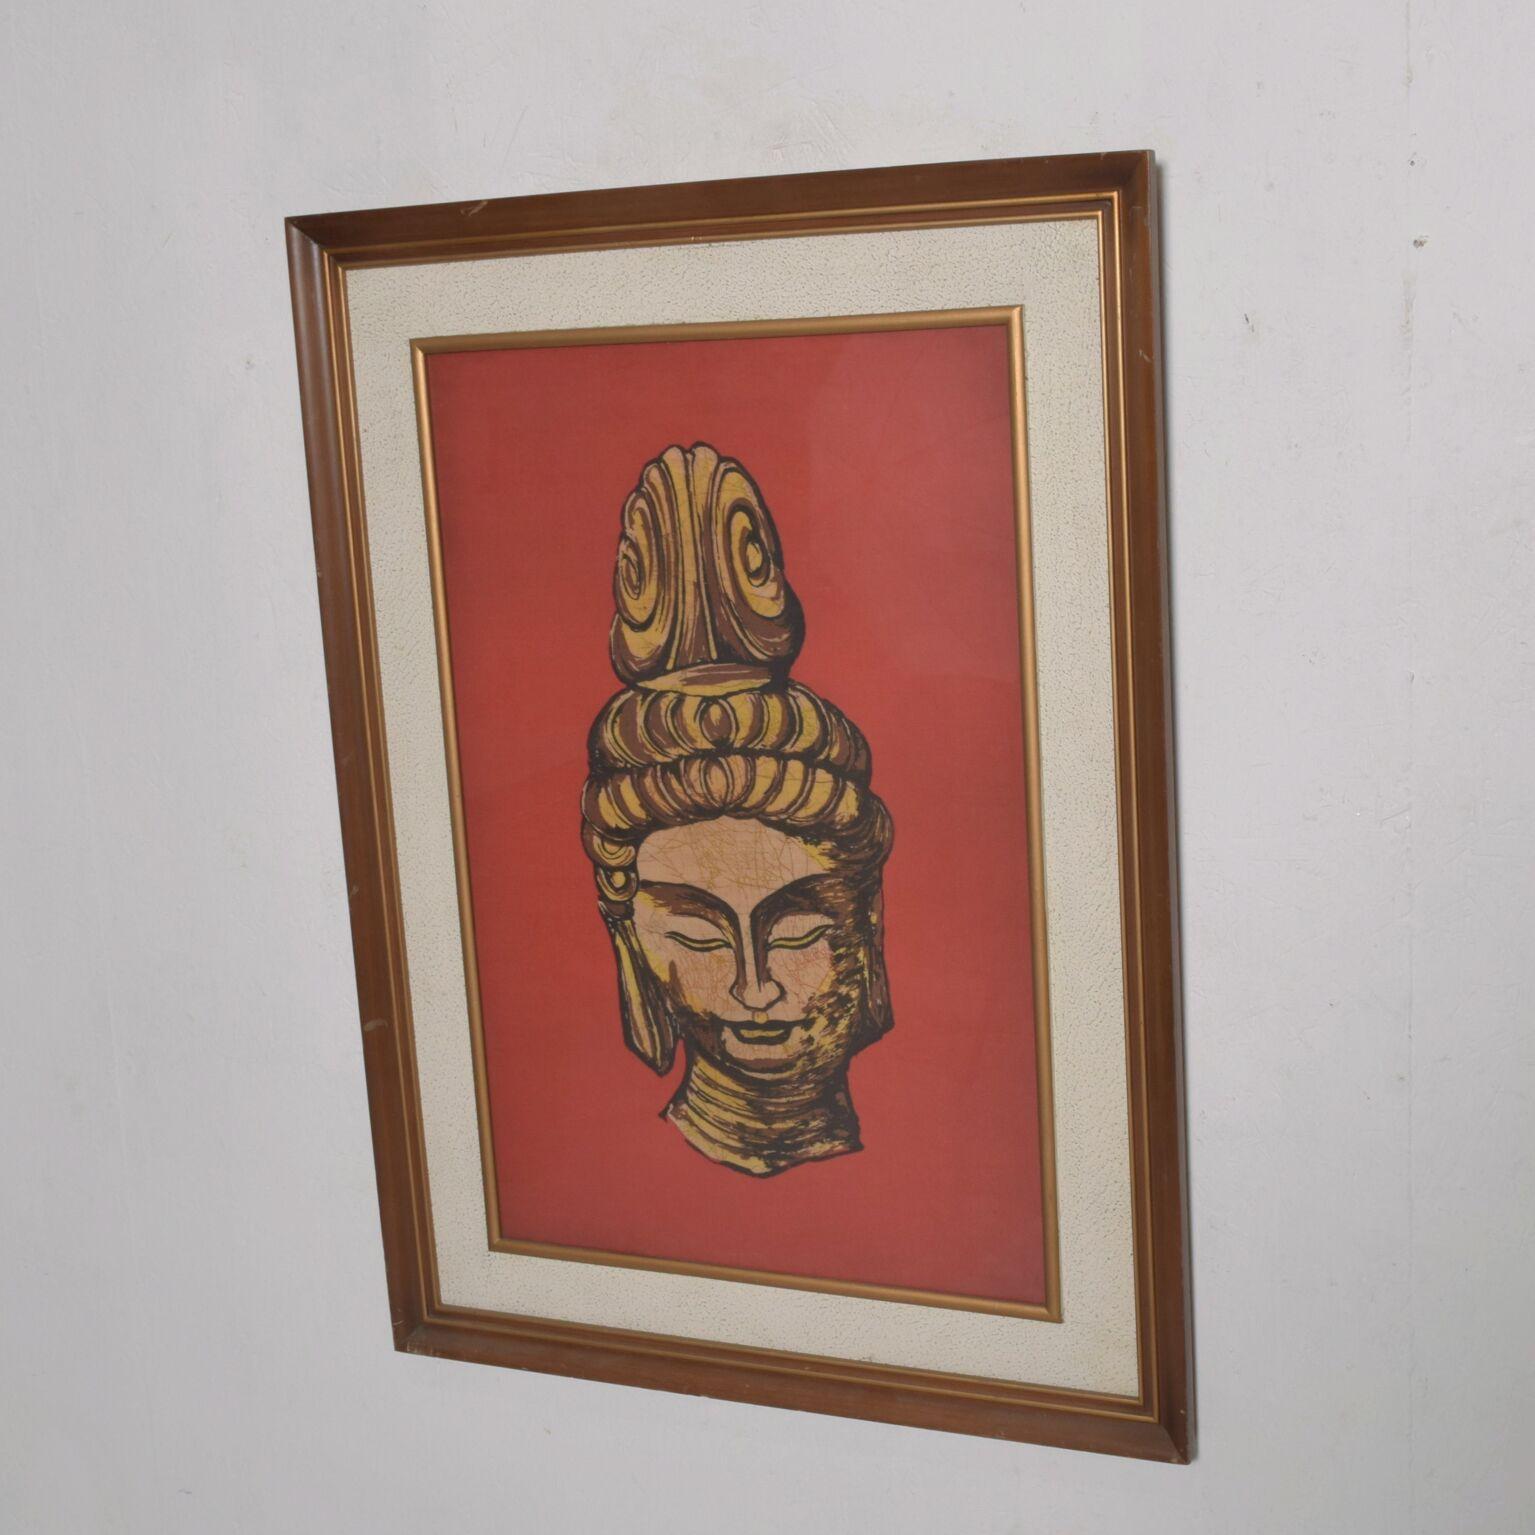 AMBIANIC offers
Budda Head Red Gold Chinese Batik Art
Dimensions:  29